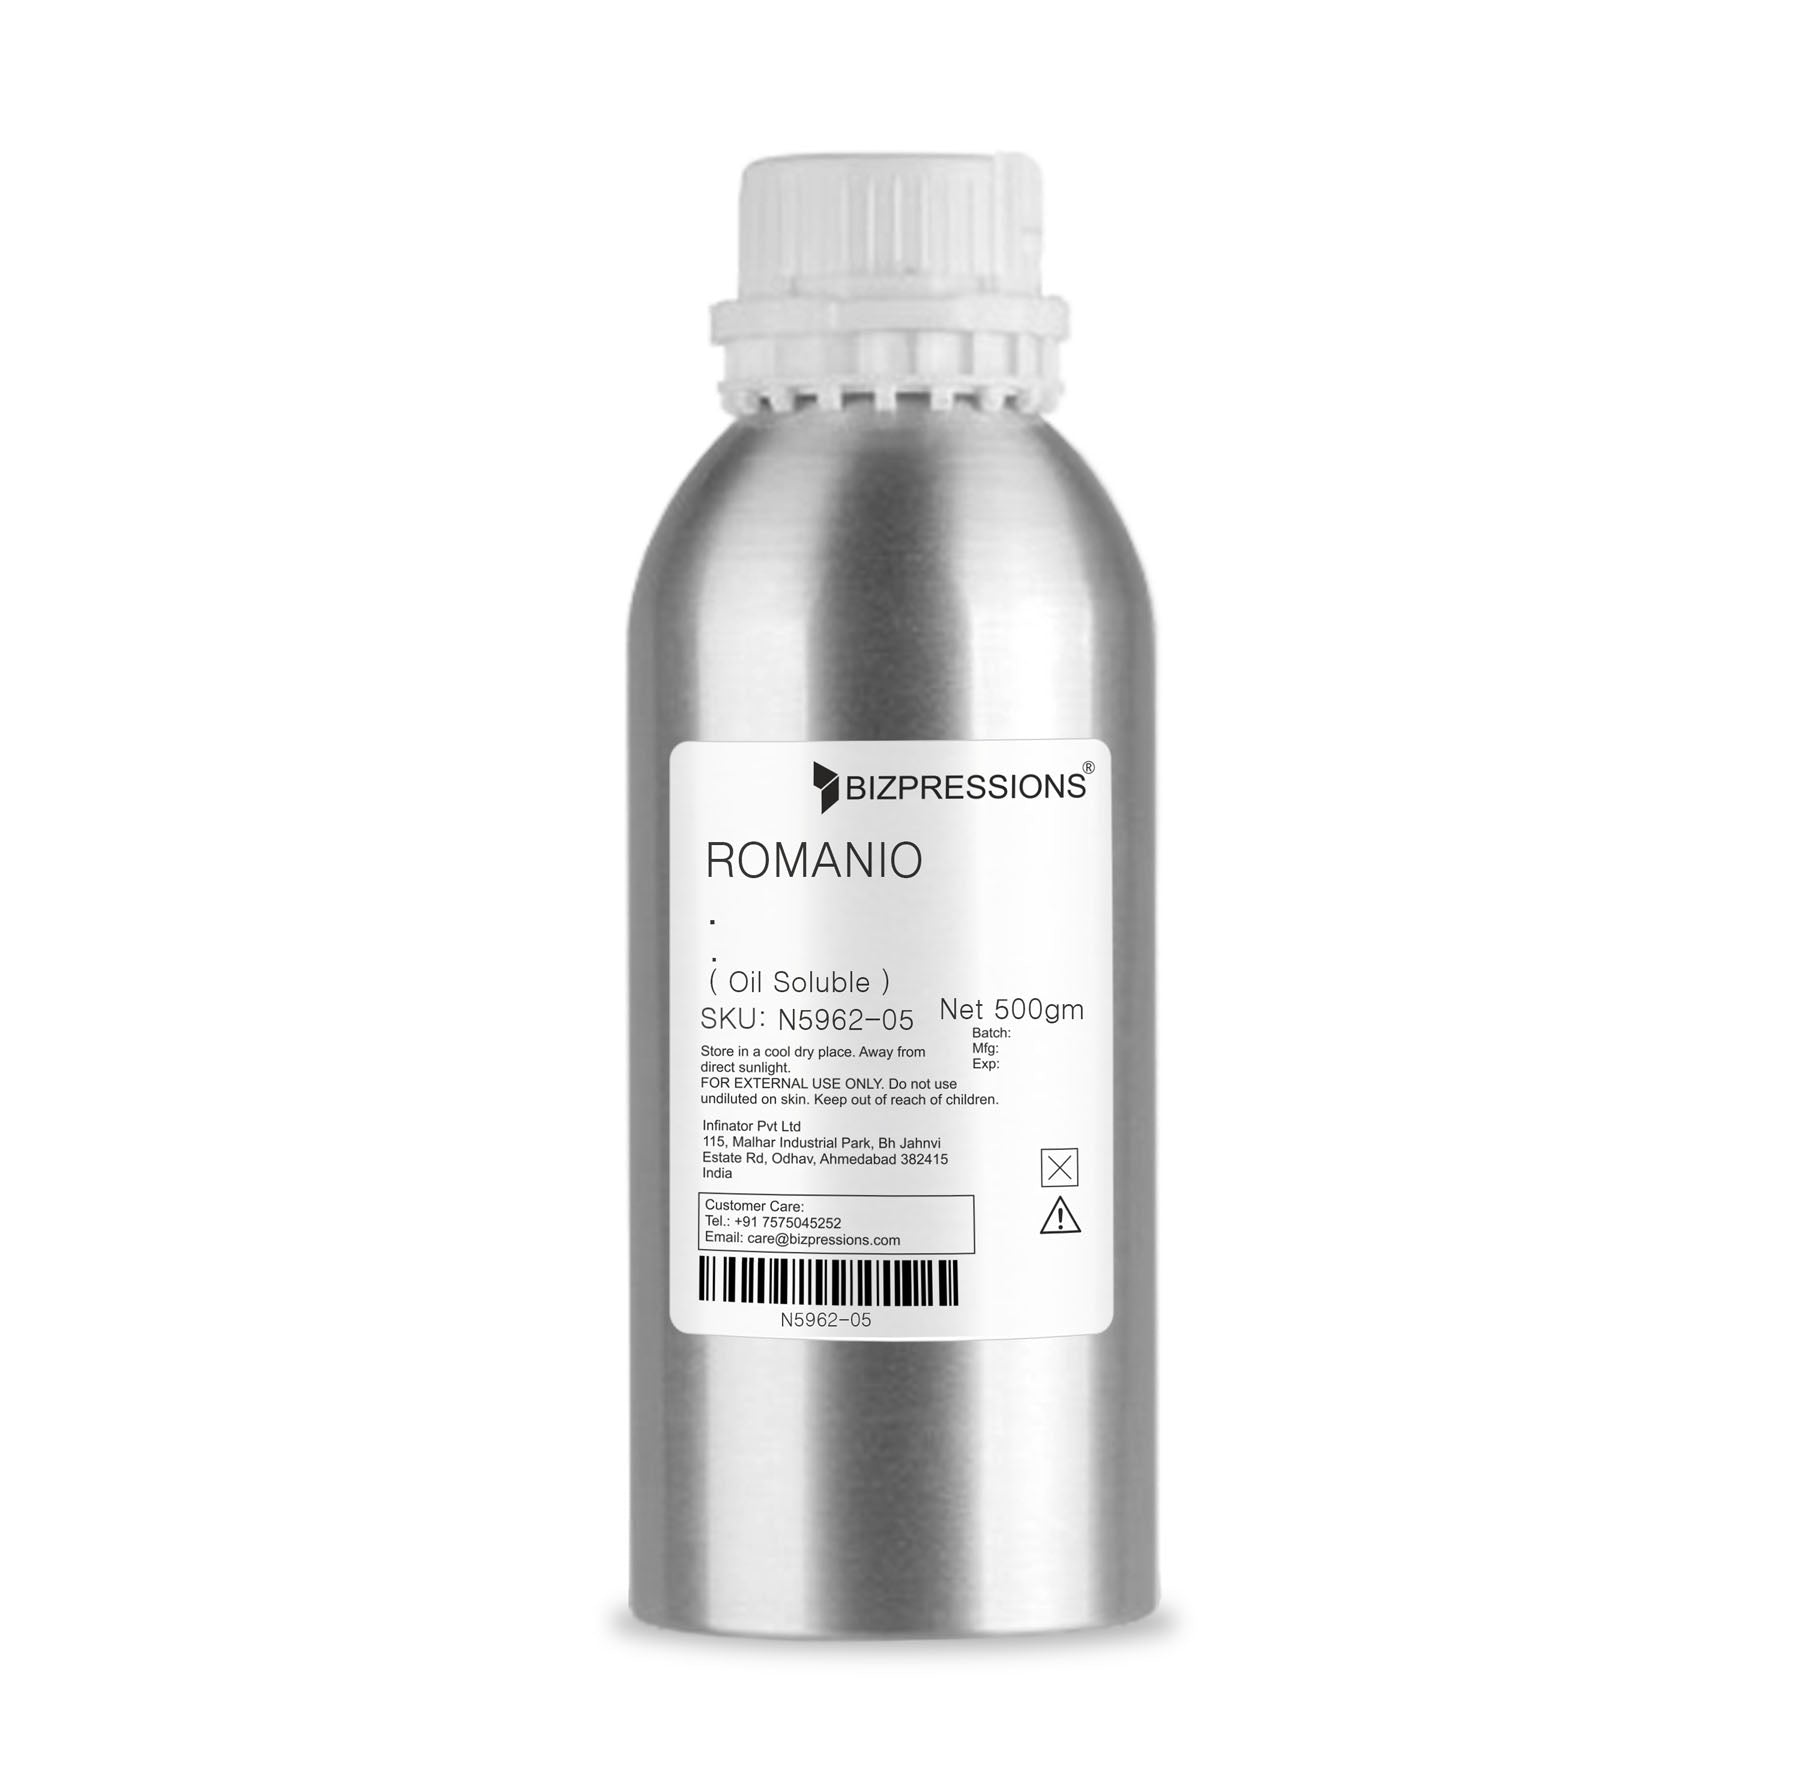 ROMANIO - Fragrance ( Oil Soluble ) - 500 gm